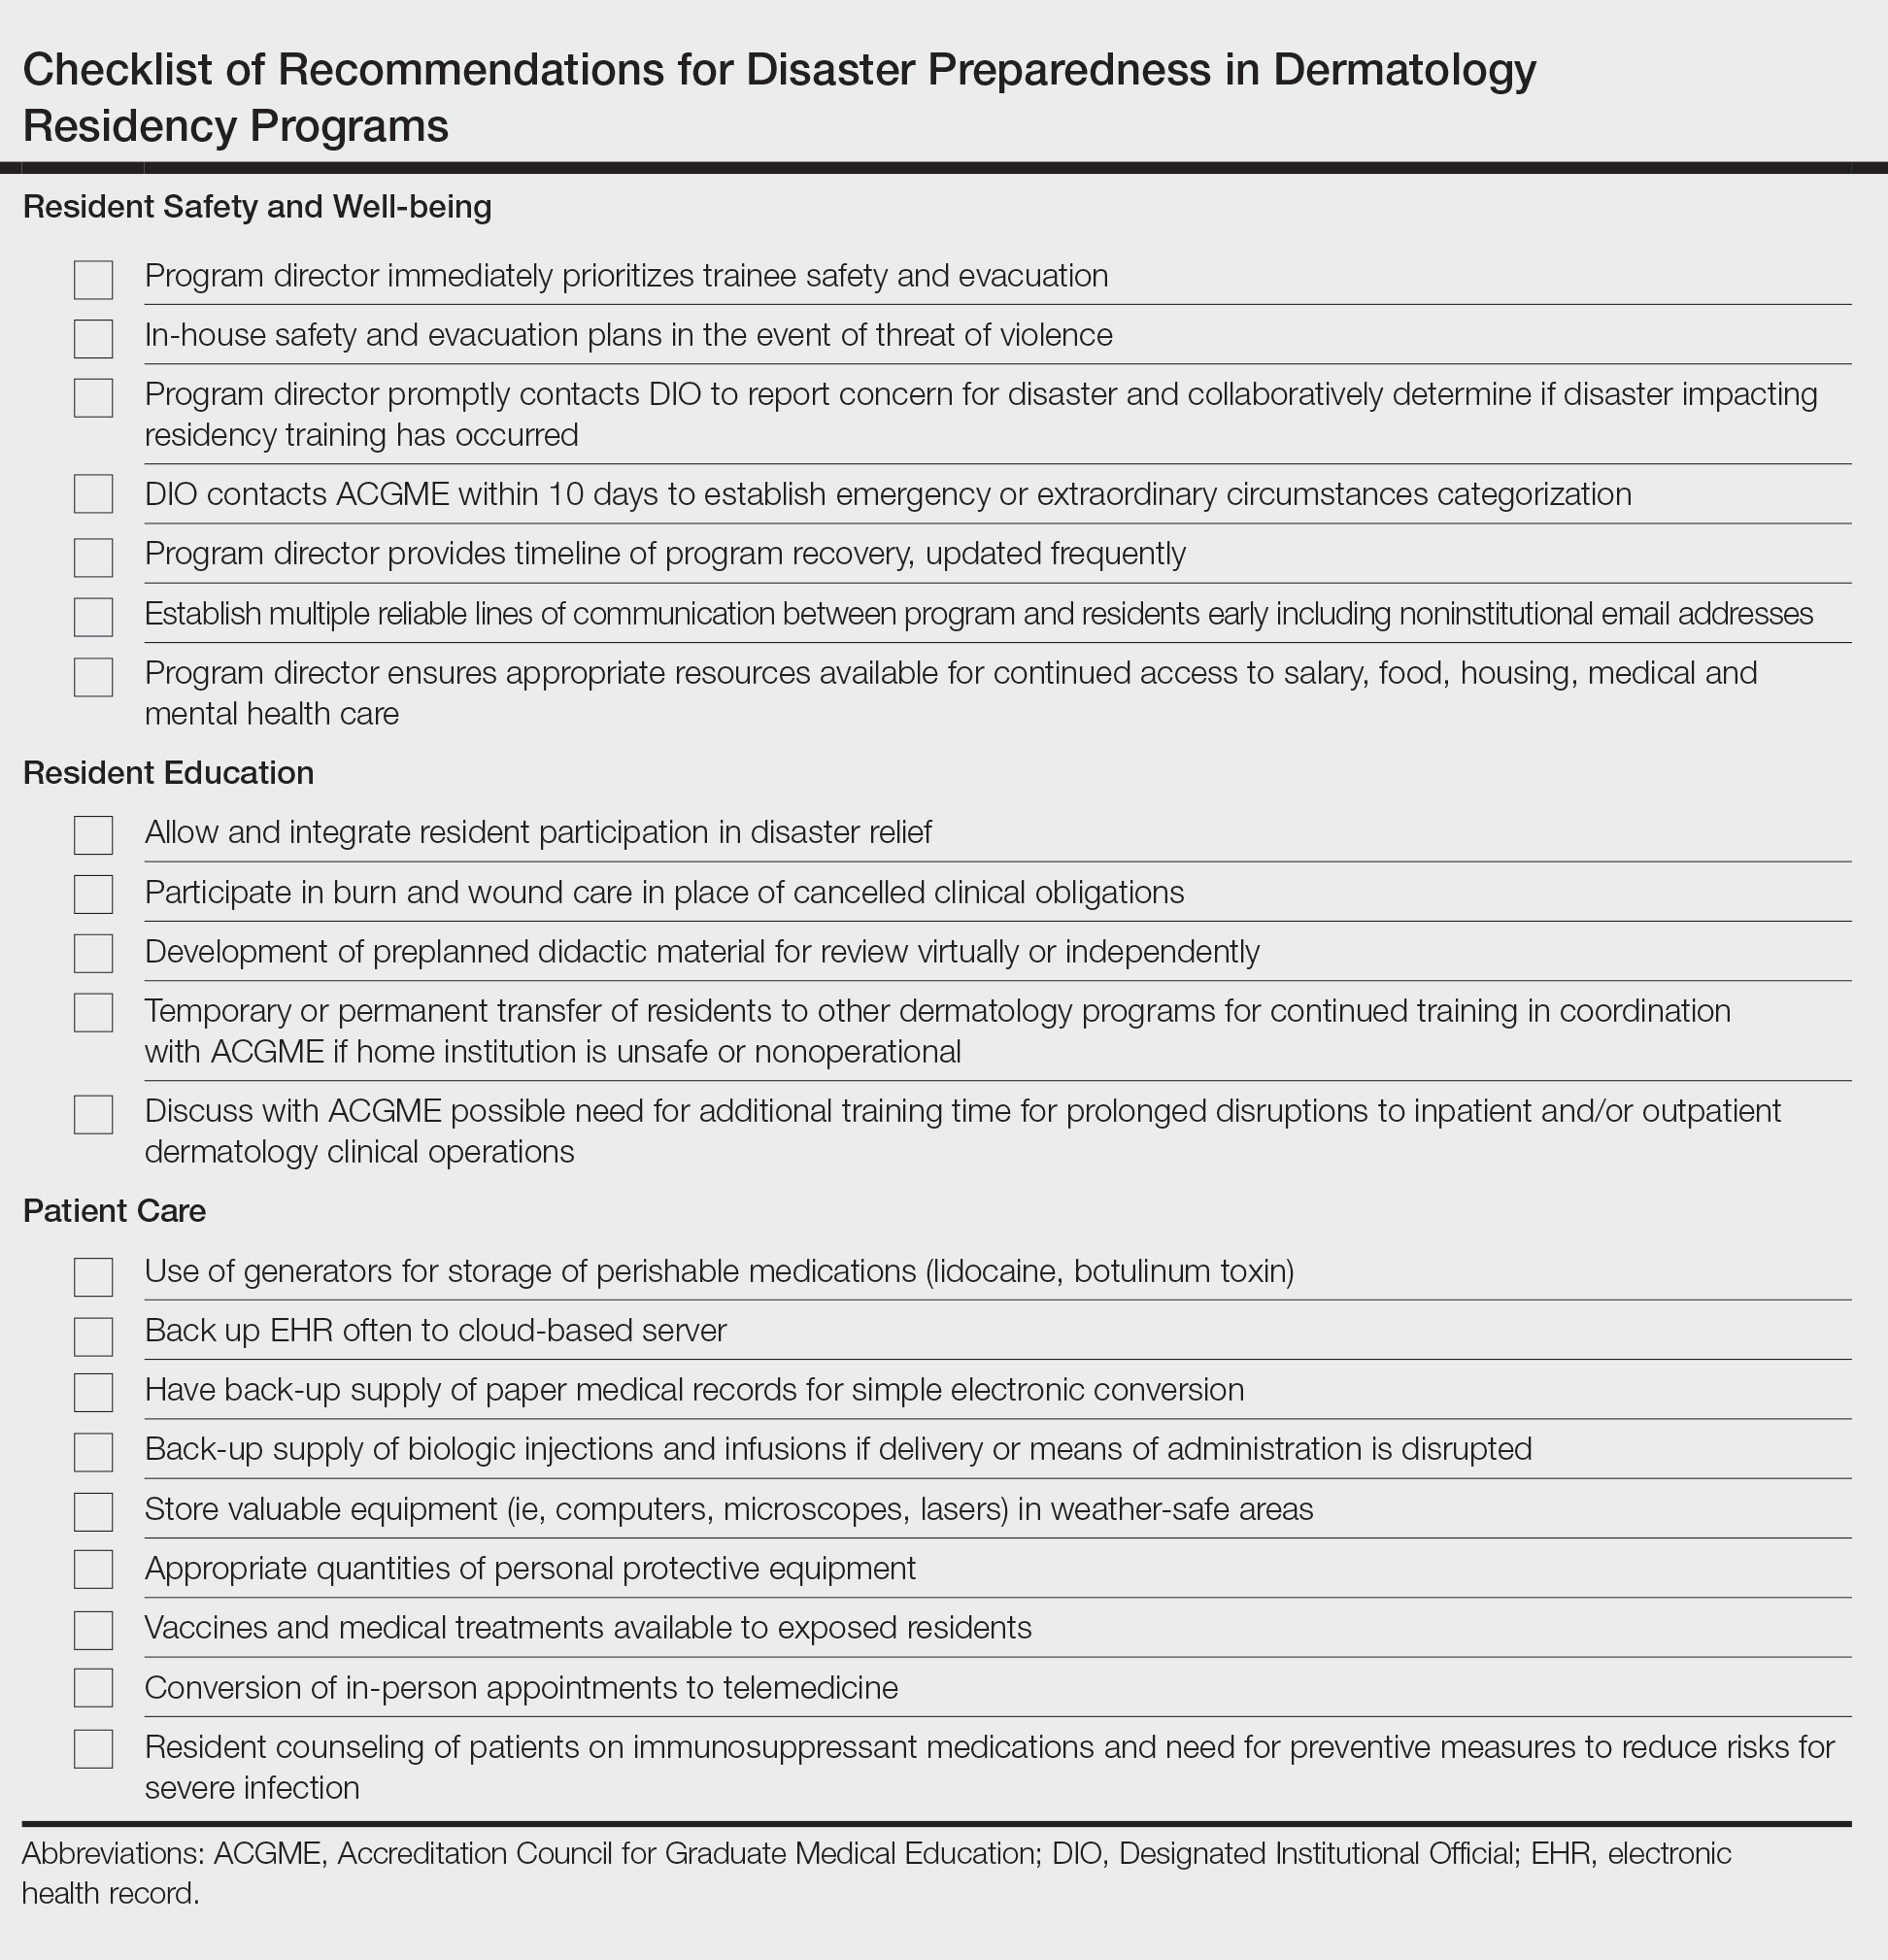 Checklist of Recommendations for Disaster Preparedness in Dermatology Residency Programs